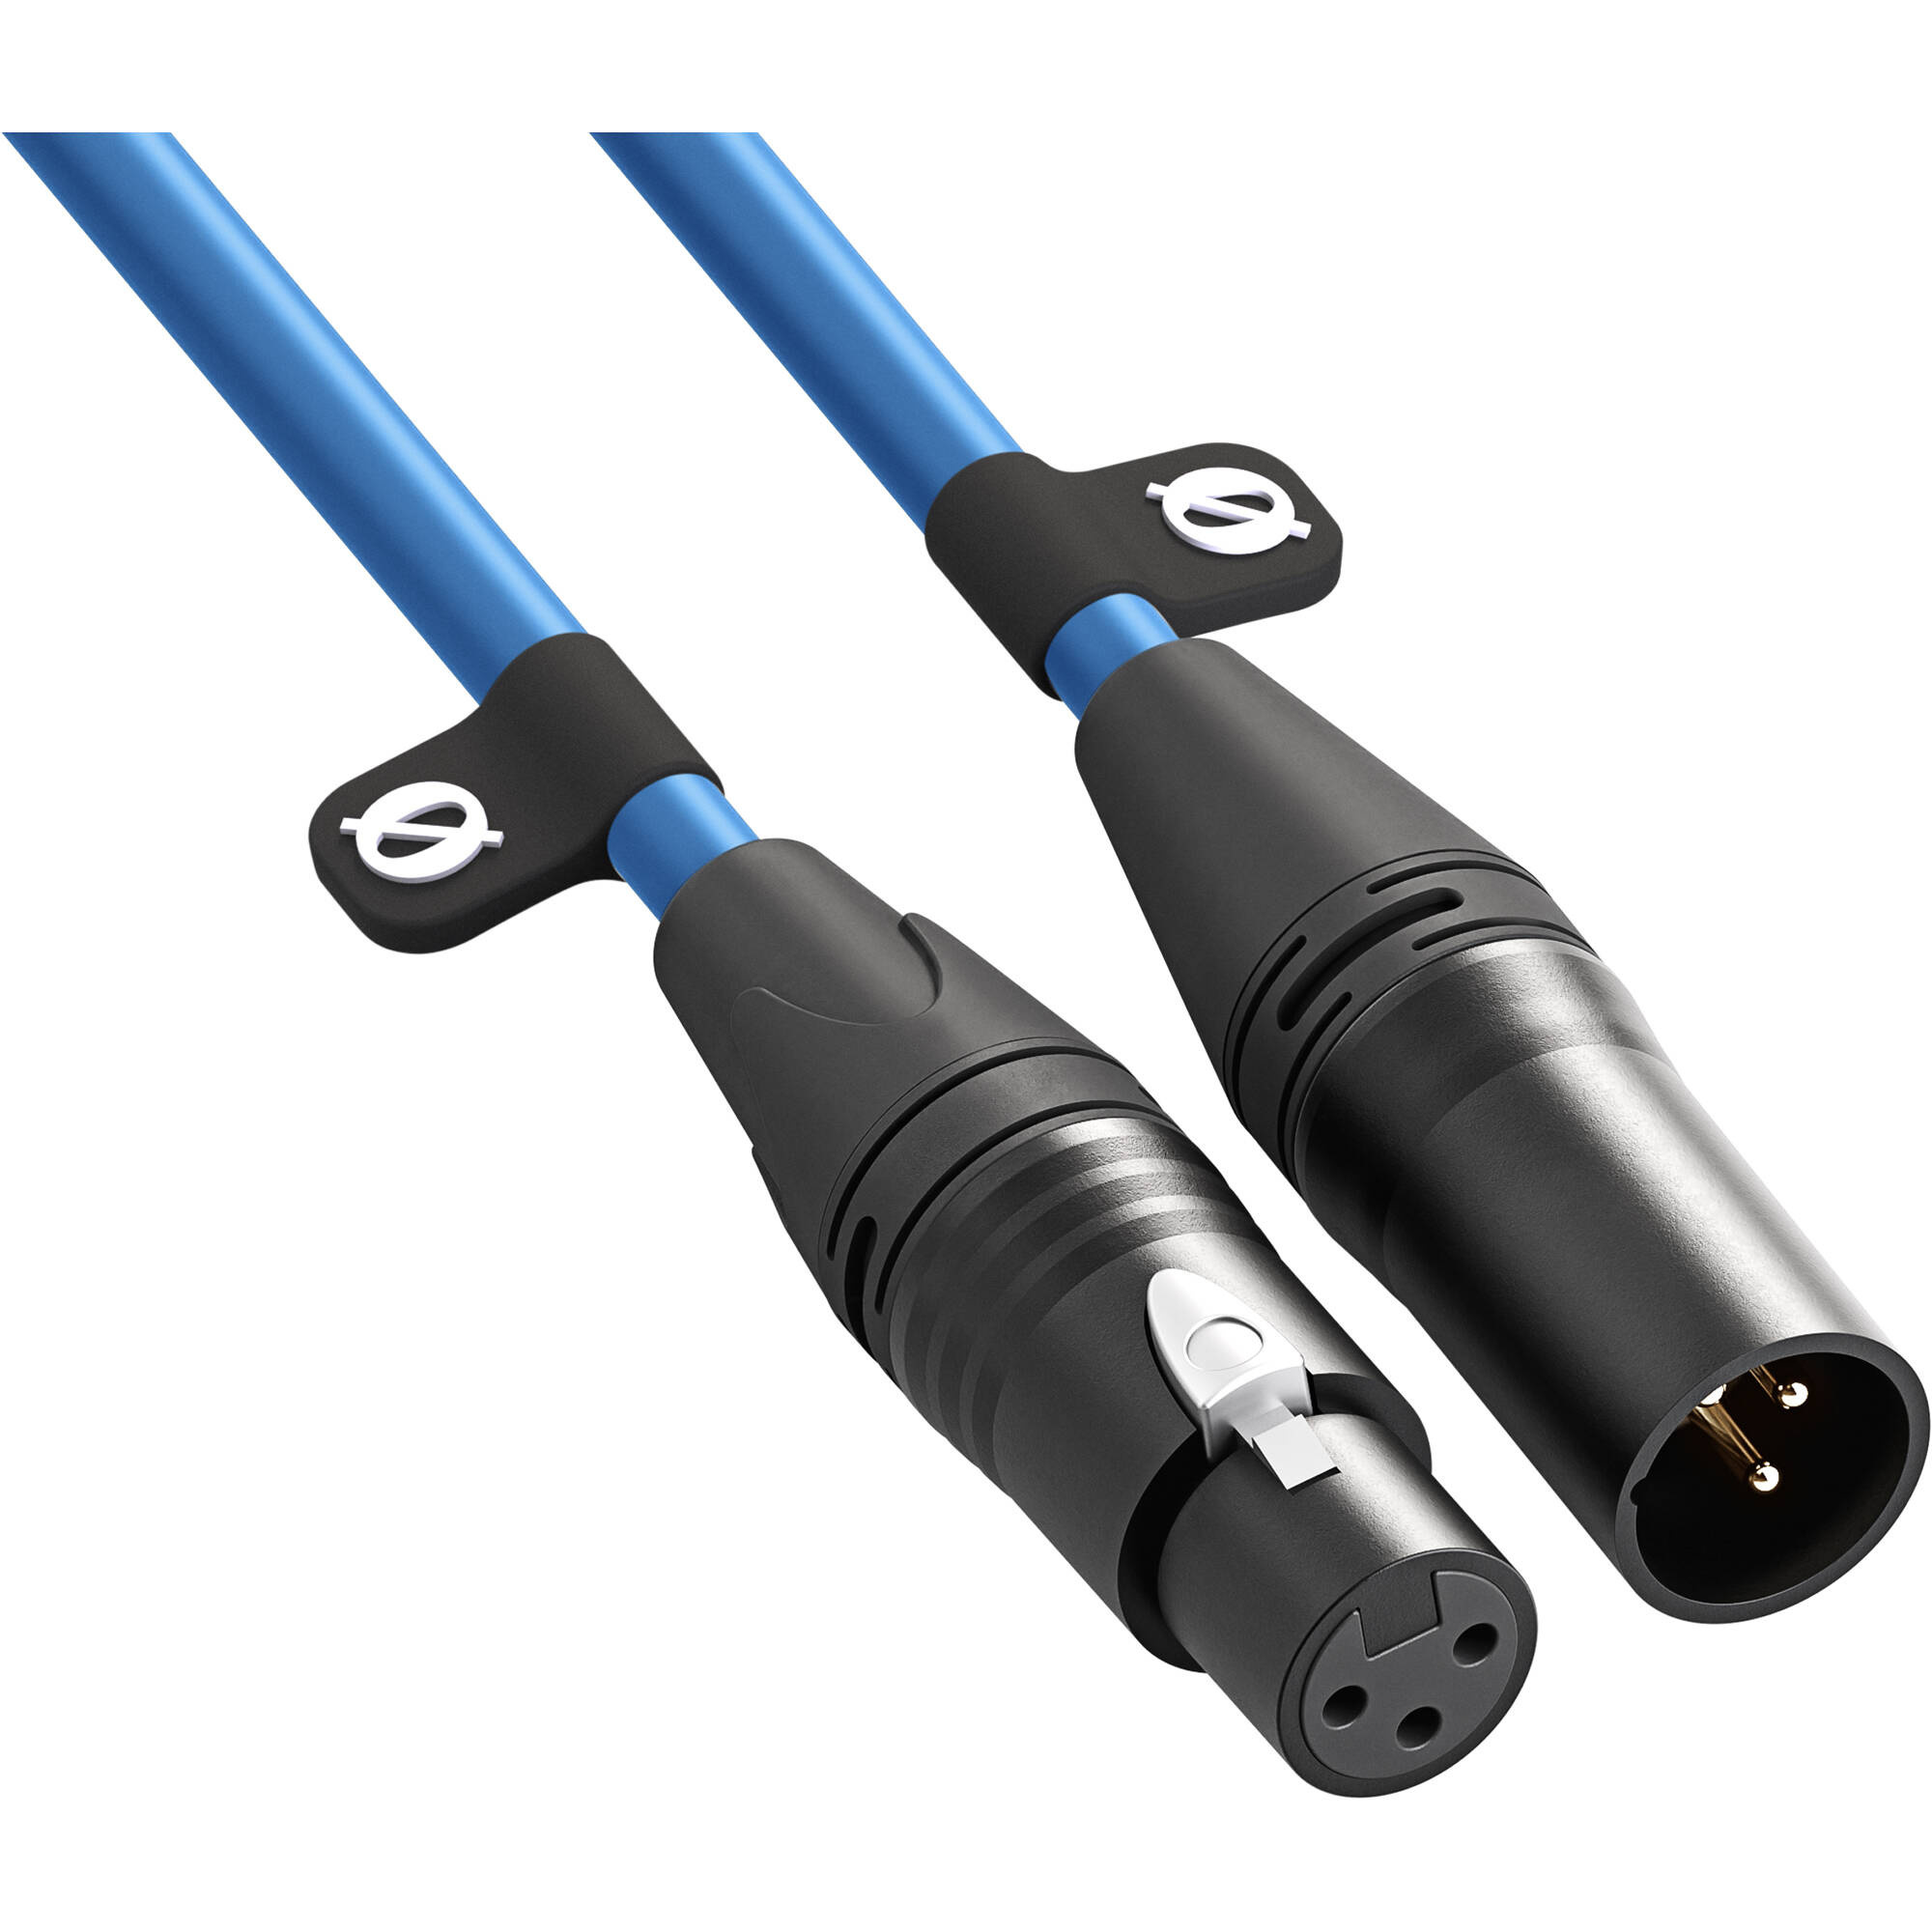 RODE XLR Male to XLR Female Cable (6m, Blue)